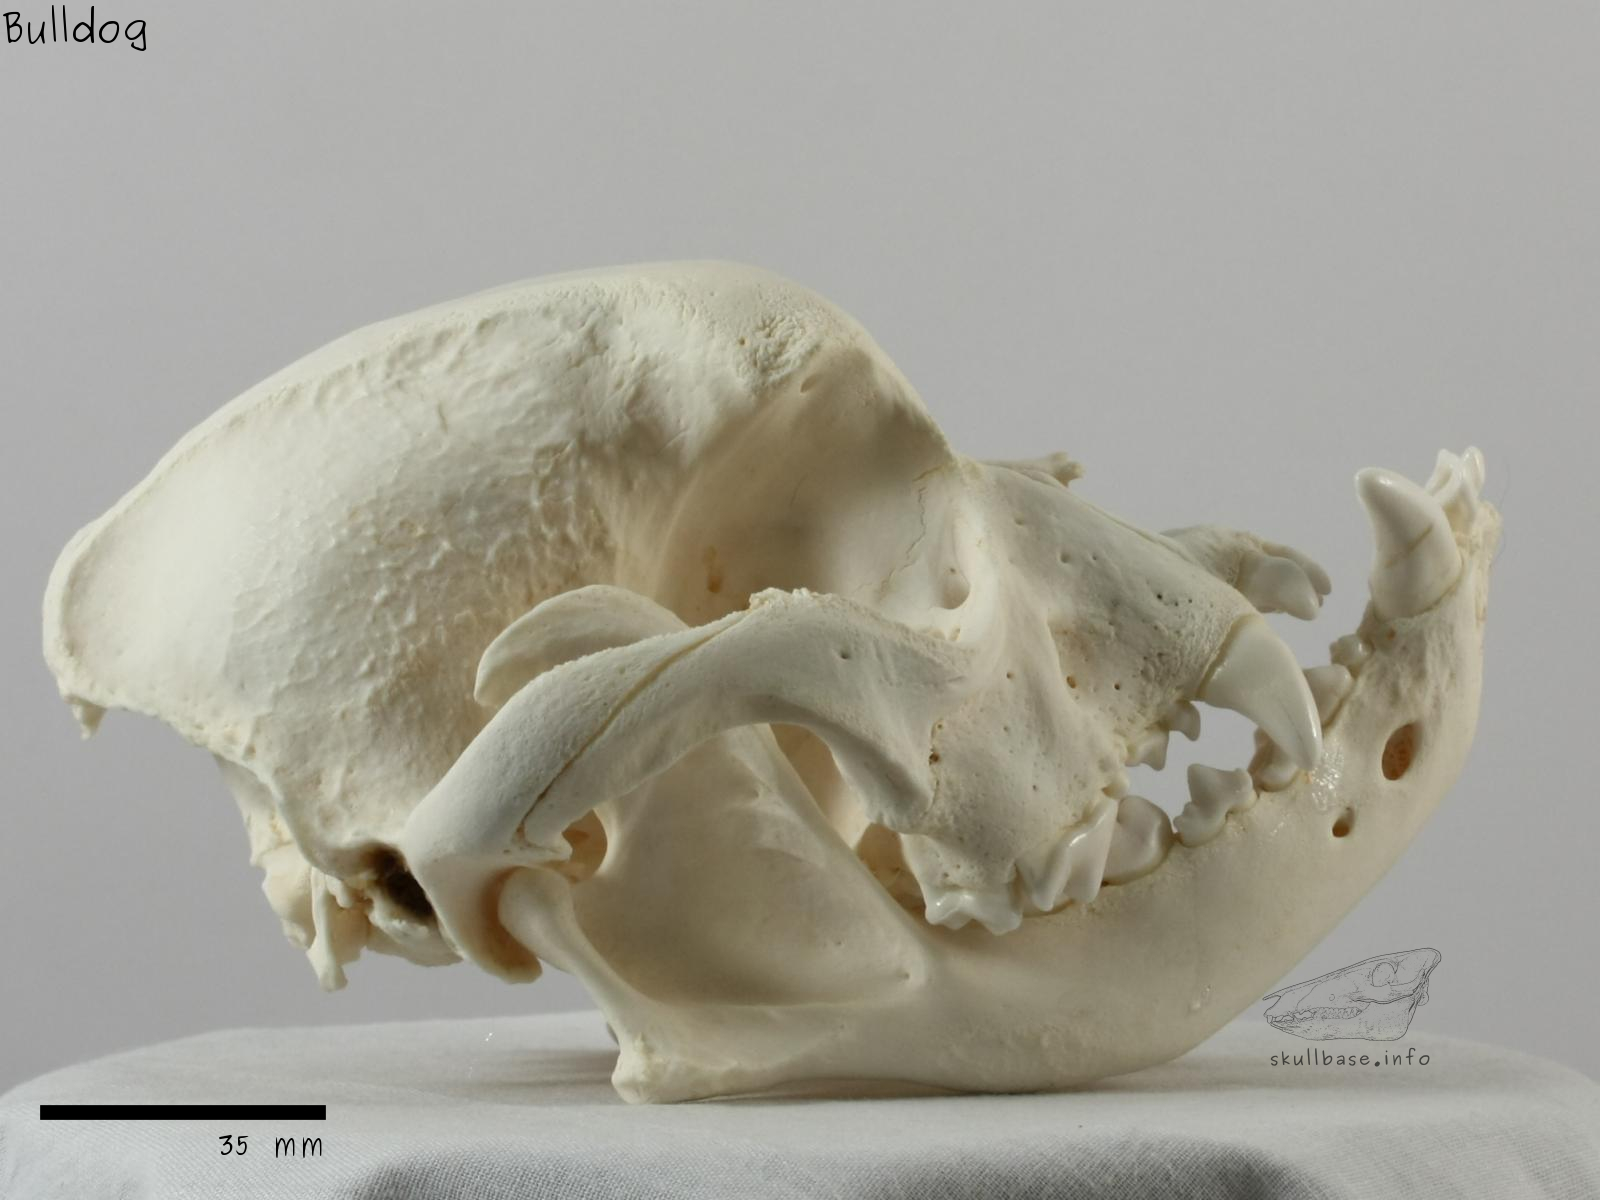 Bulldog (Canis lupus familiaris) skull lateral view